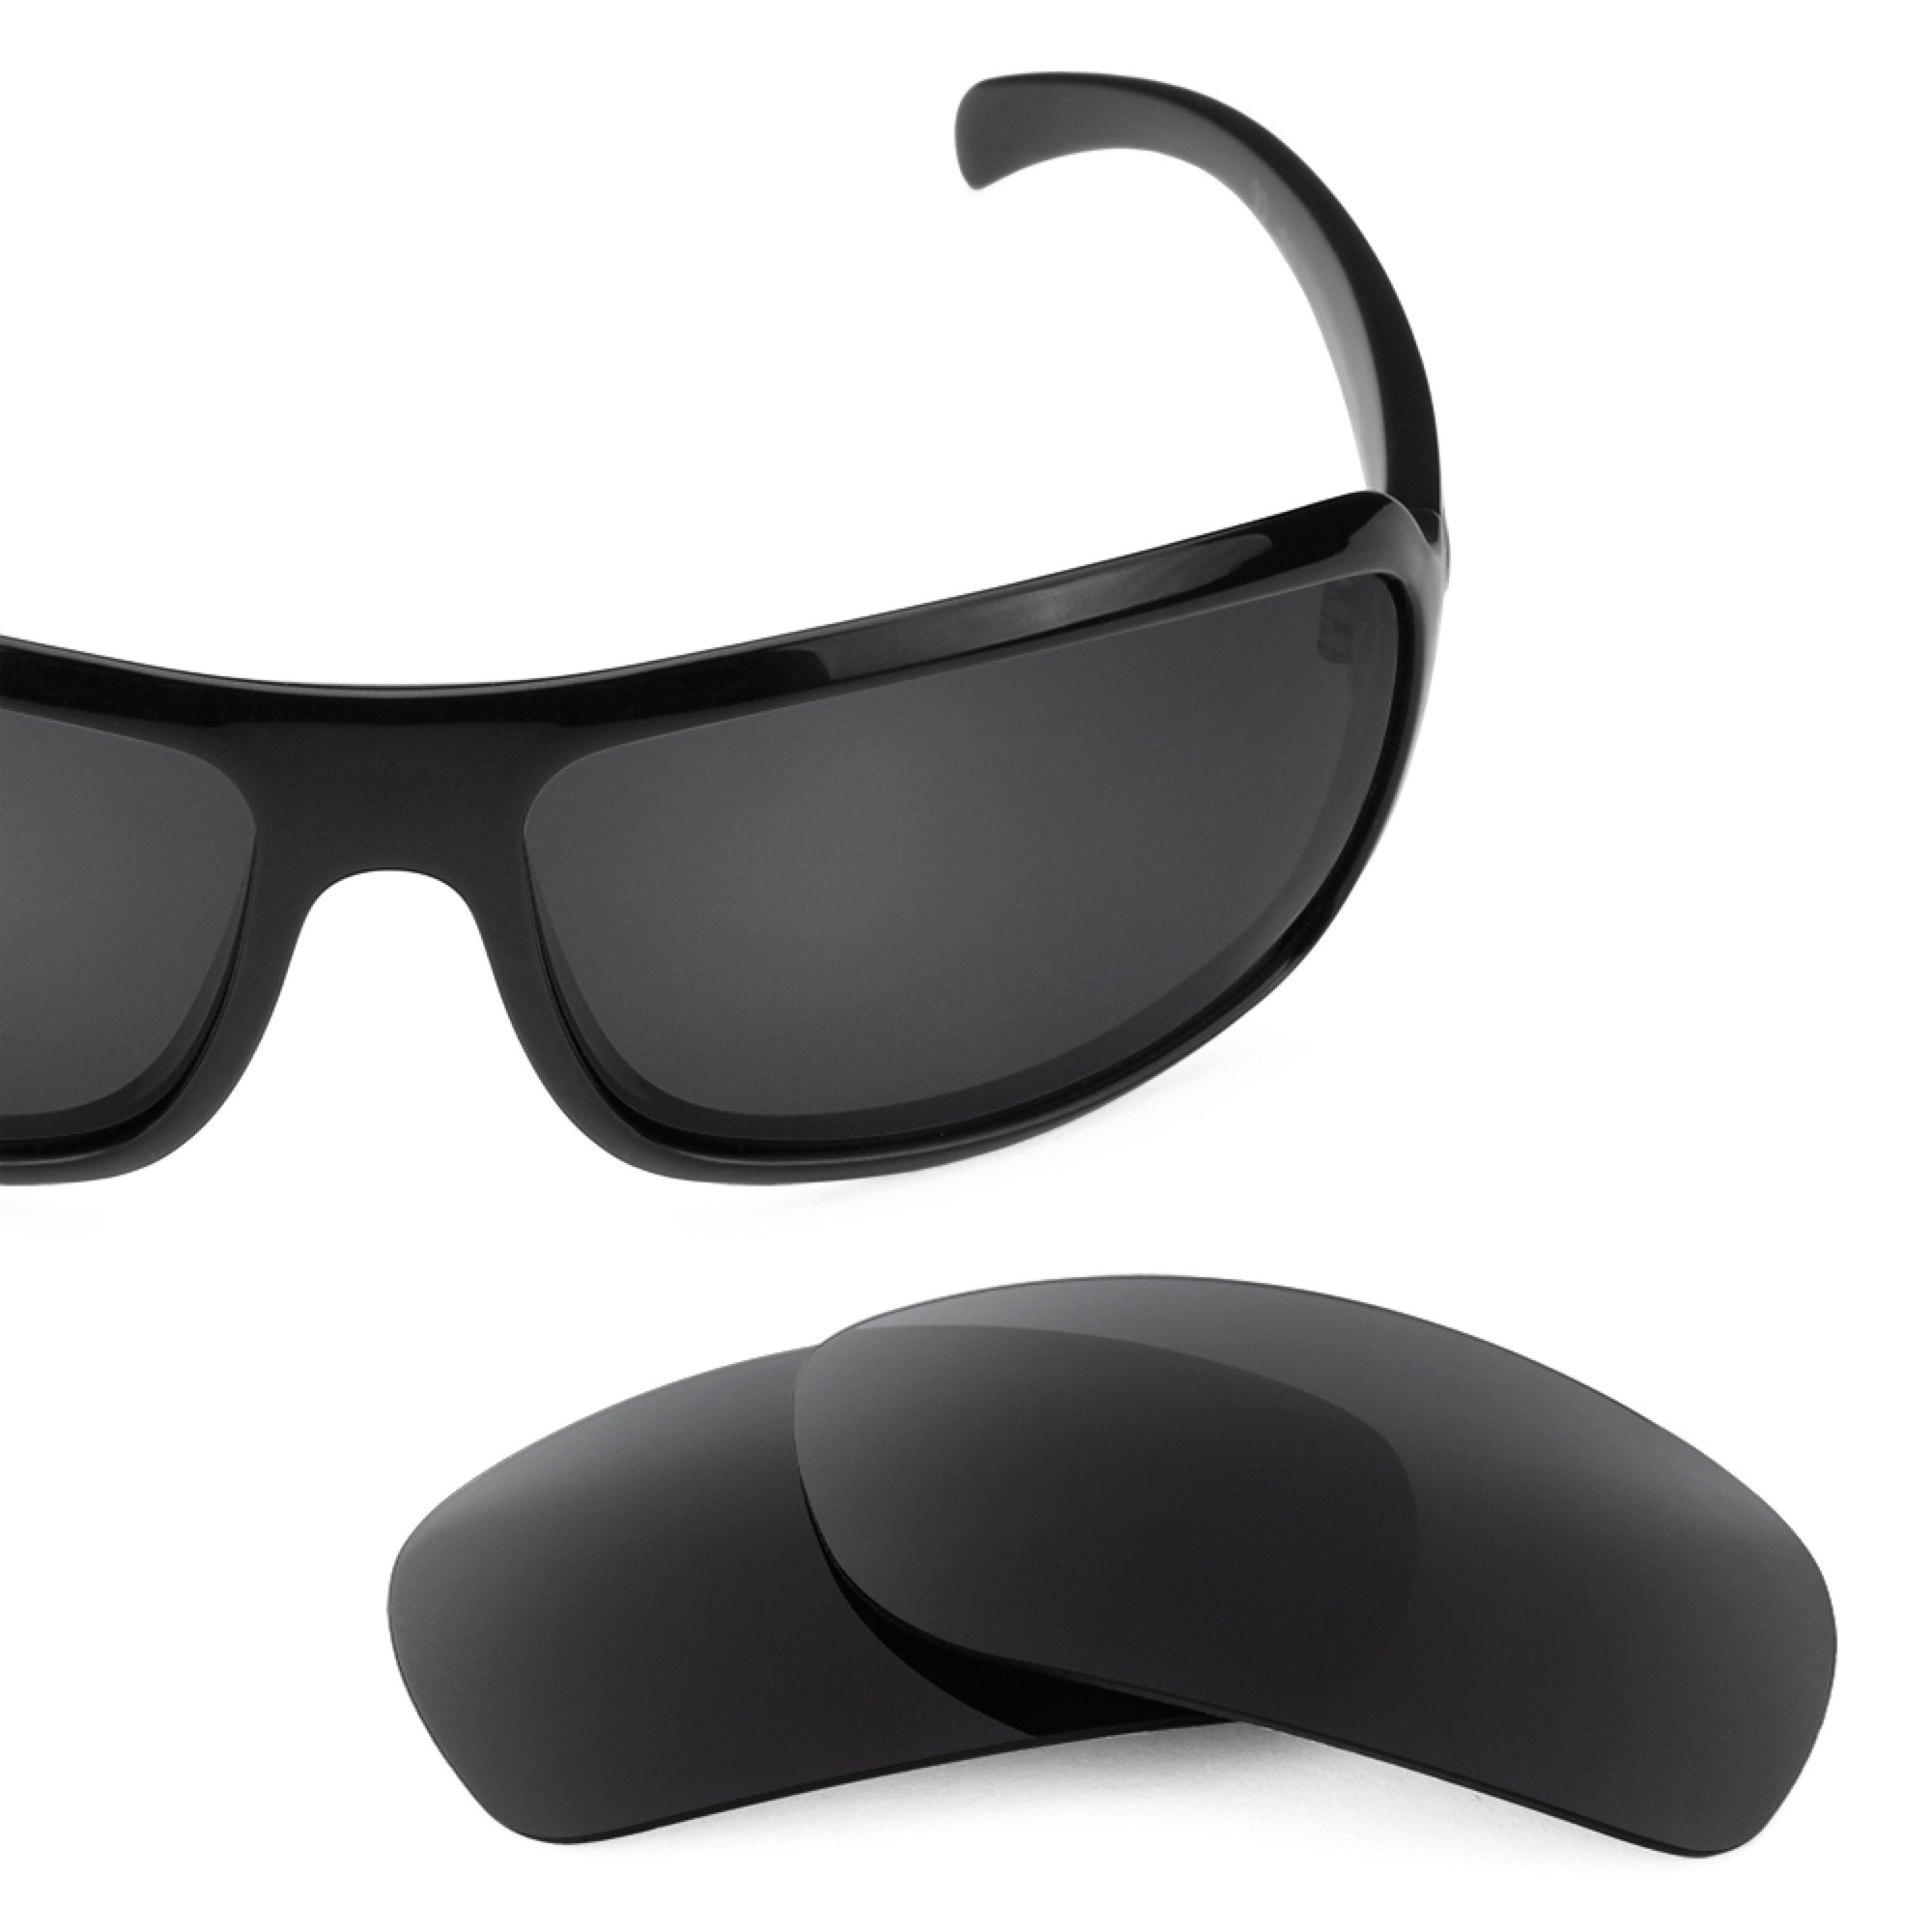 Super Black - Black Polarized Sunglasses | SUNHAUK